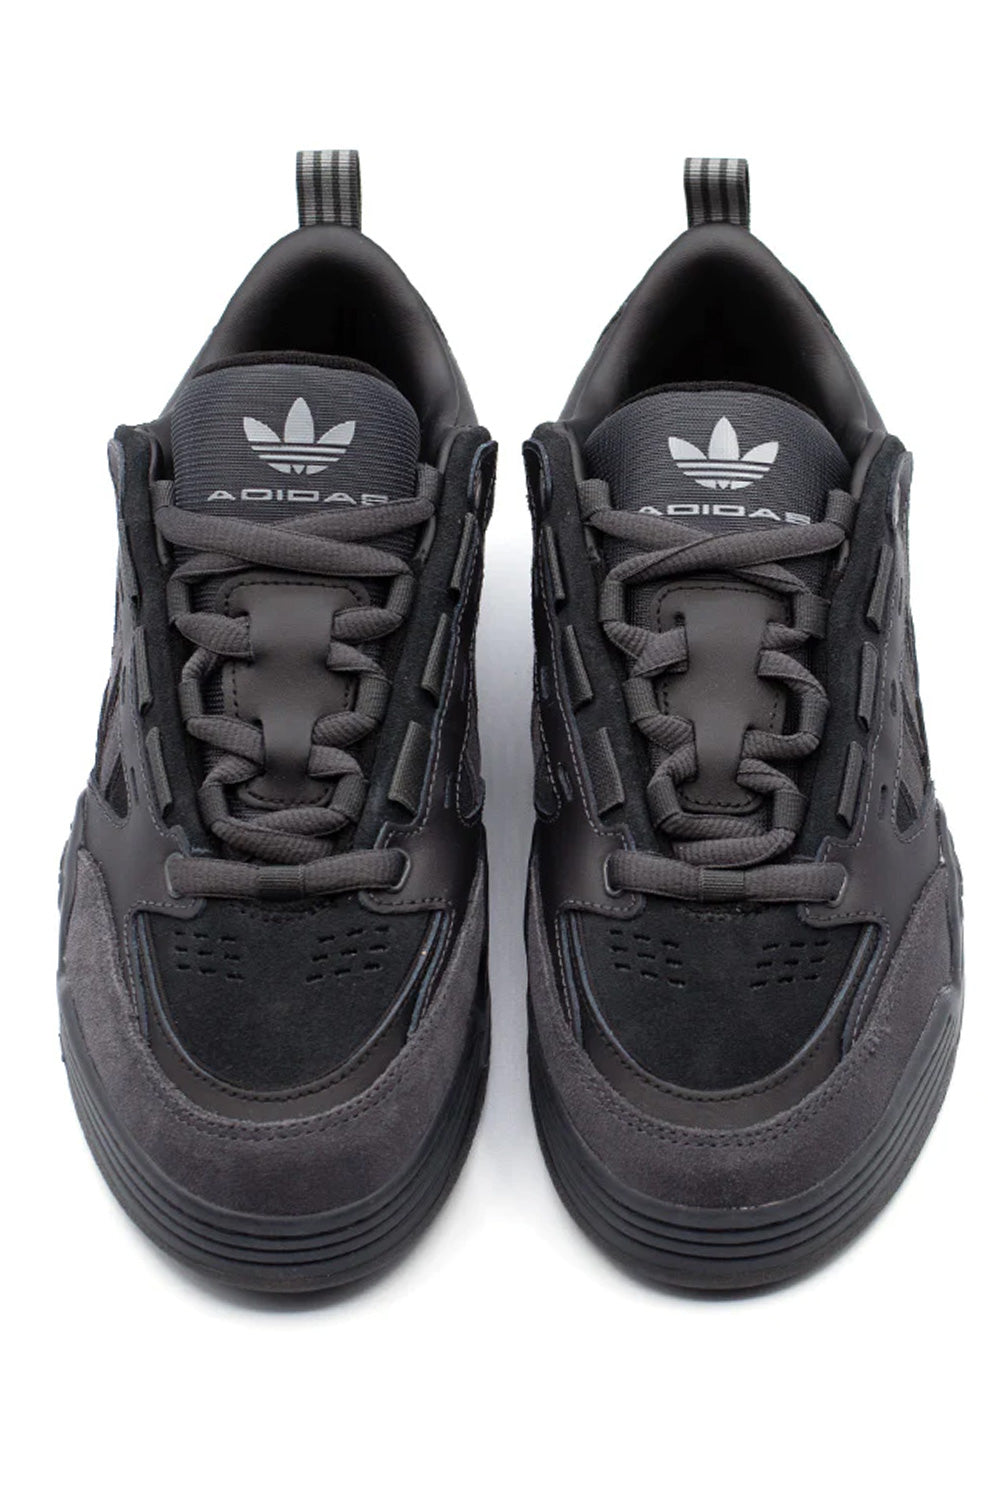 Adidas Adi2000 Shoe Core Black BONKERS / Black Black Utility | / Utility